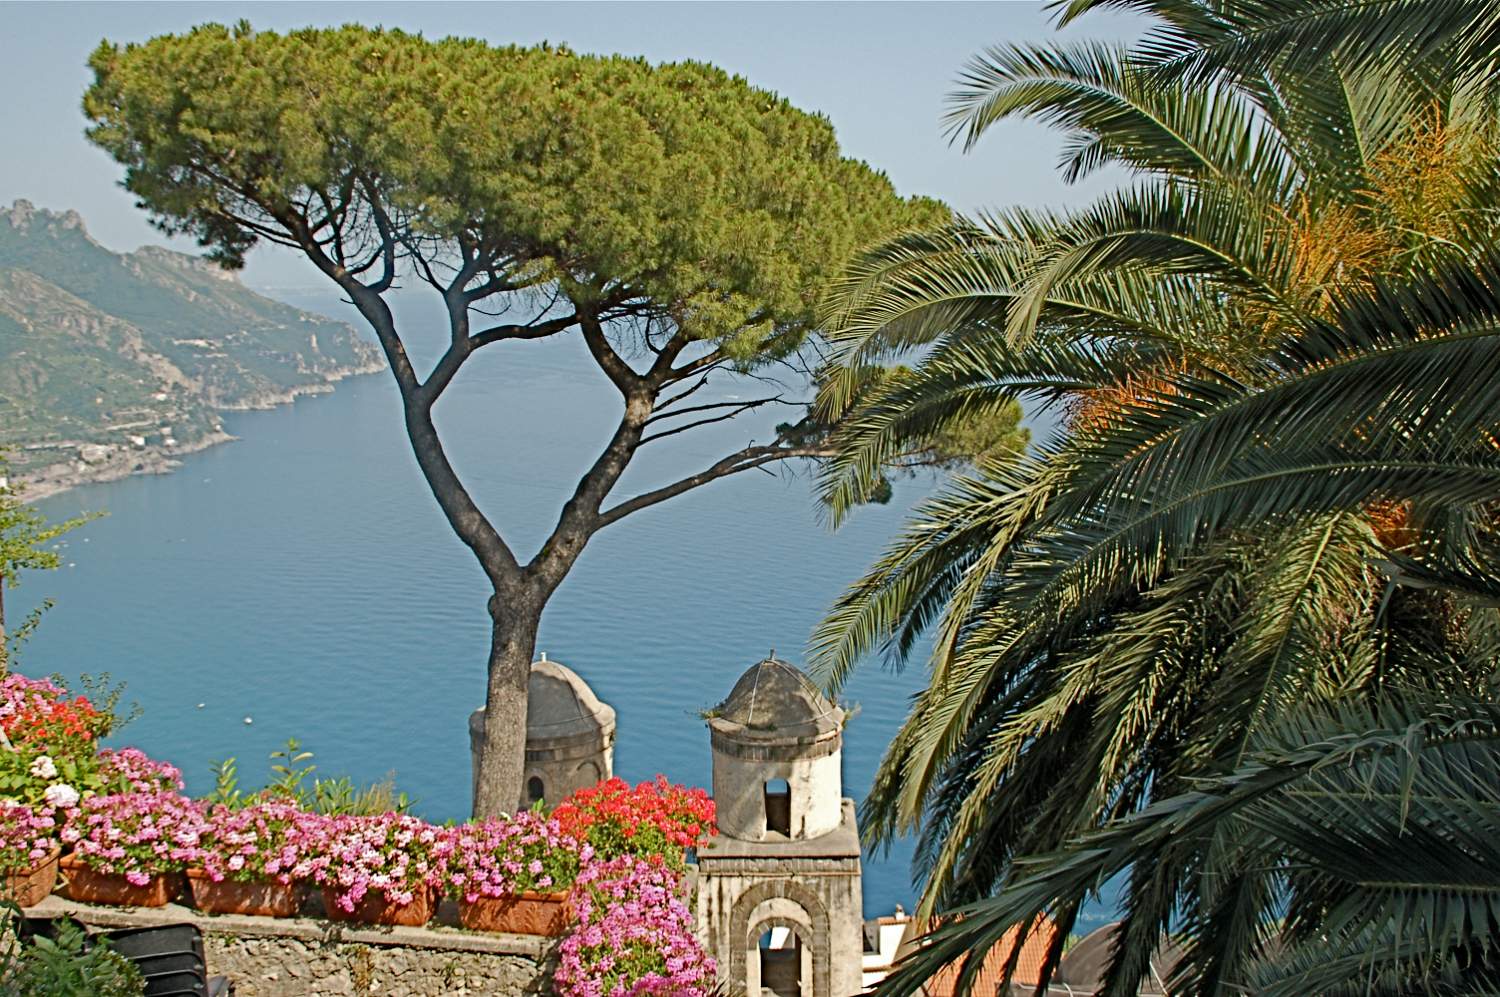 Amalfi Coast view from Villa Rufolo gardens in Ravello.JPG